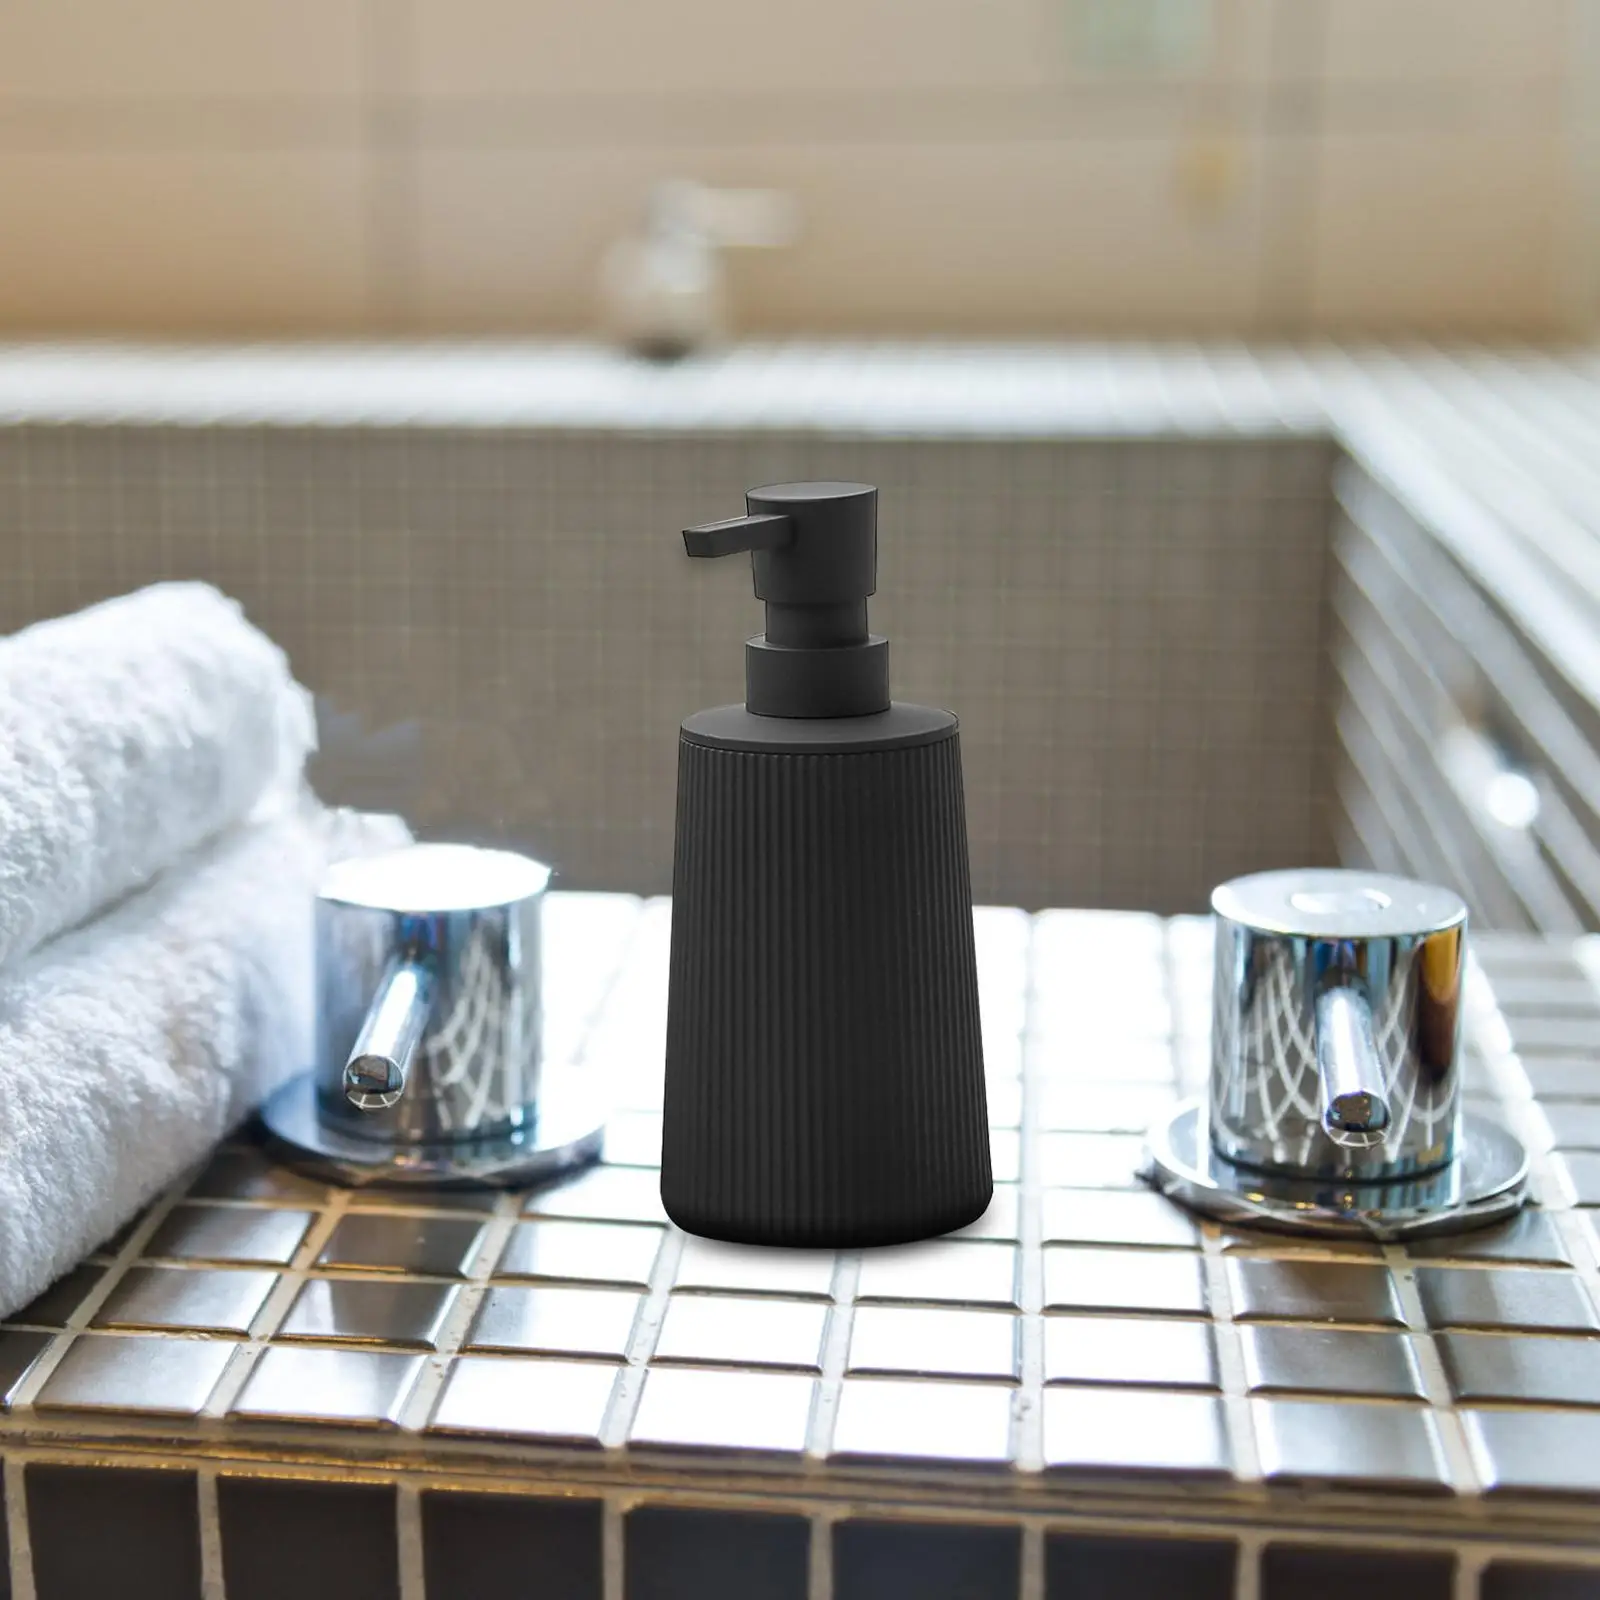 Liquid Soap Dispenser Lotion Pump Bottle for Bathroom Tabletop Moisturizer